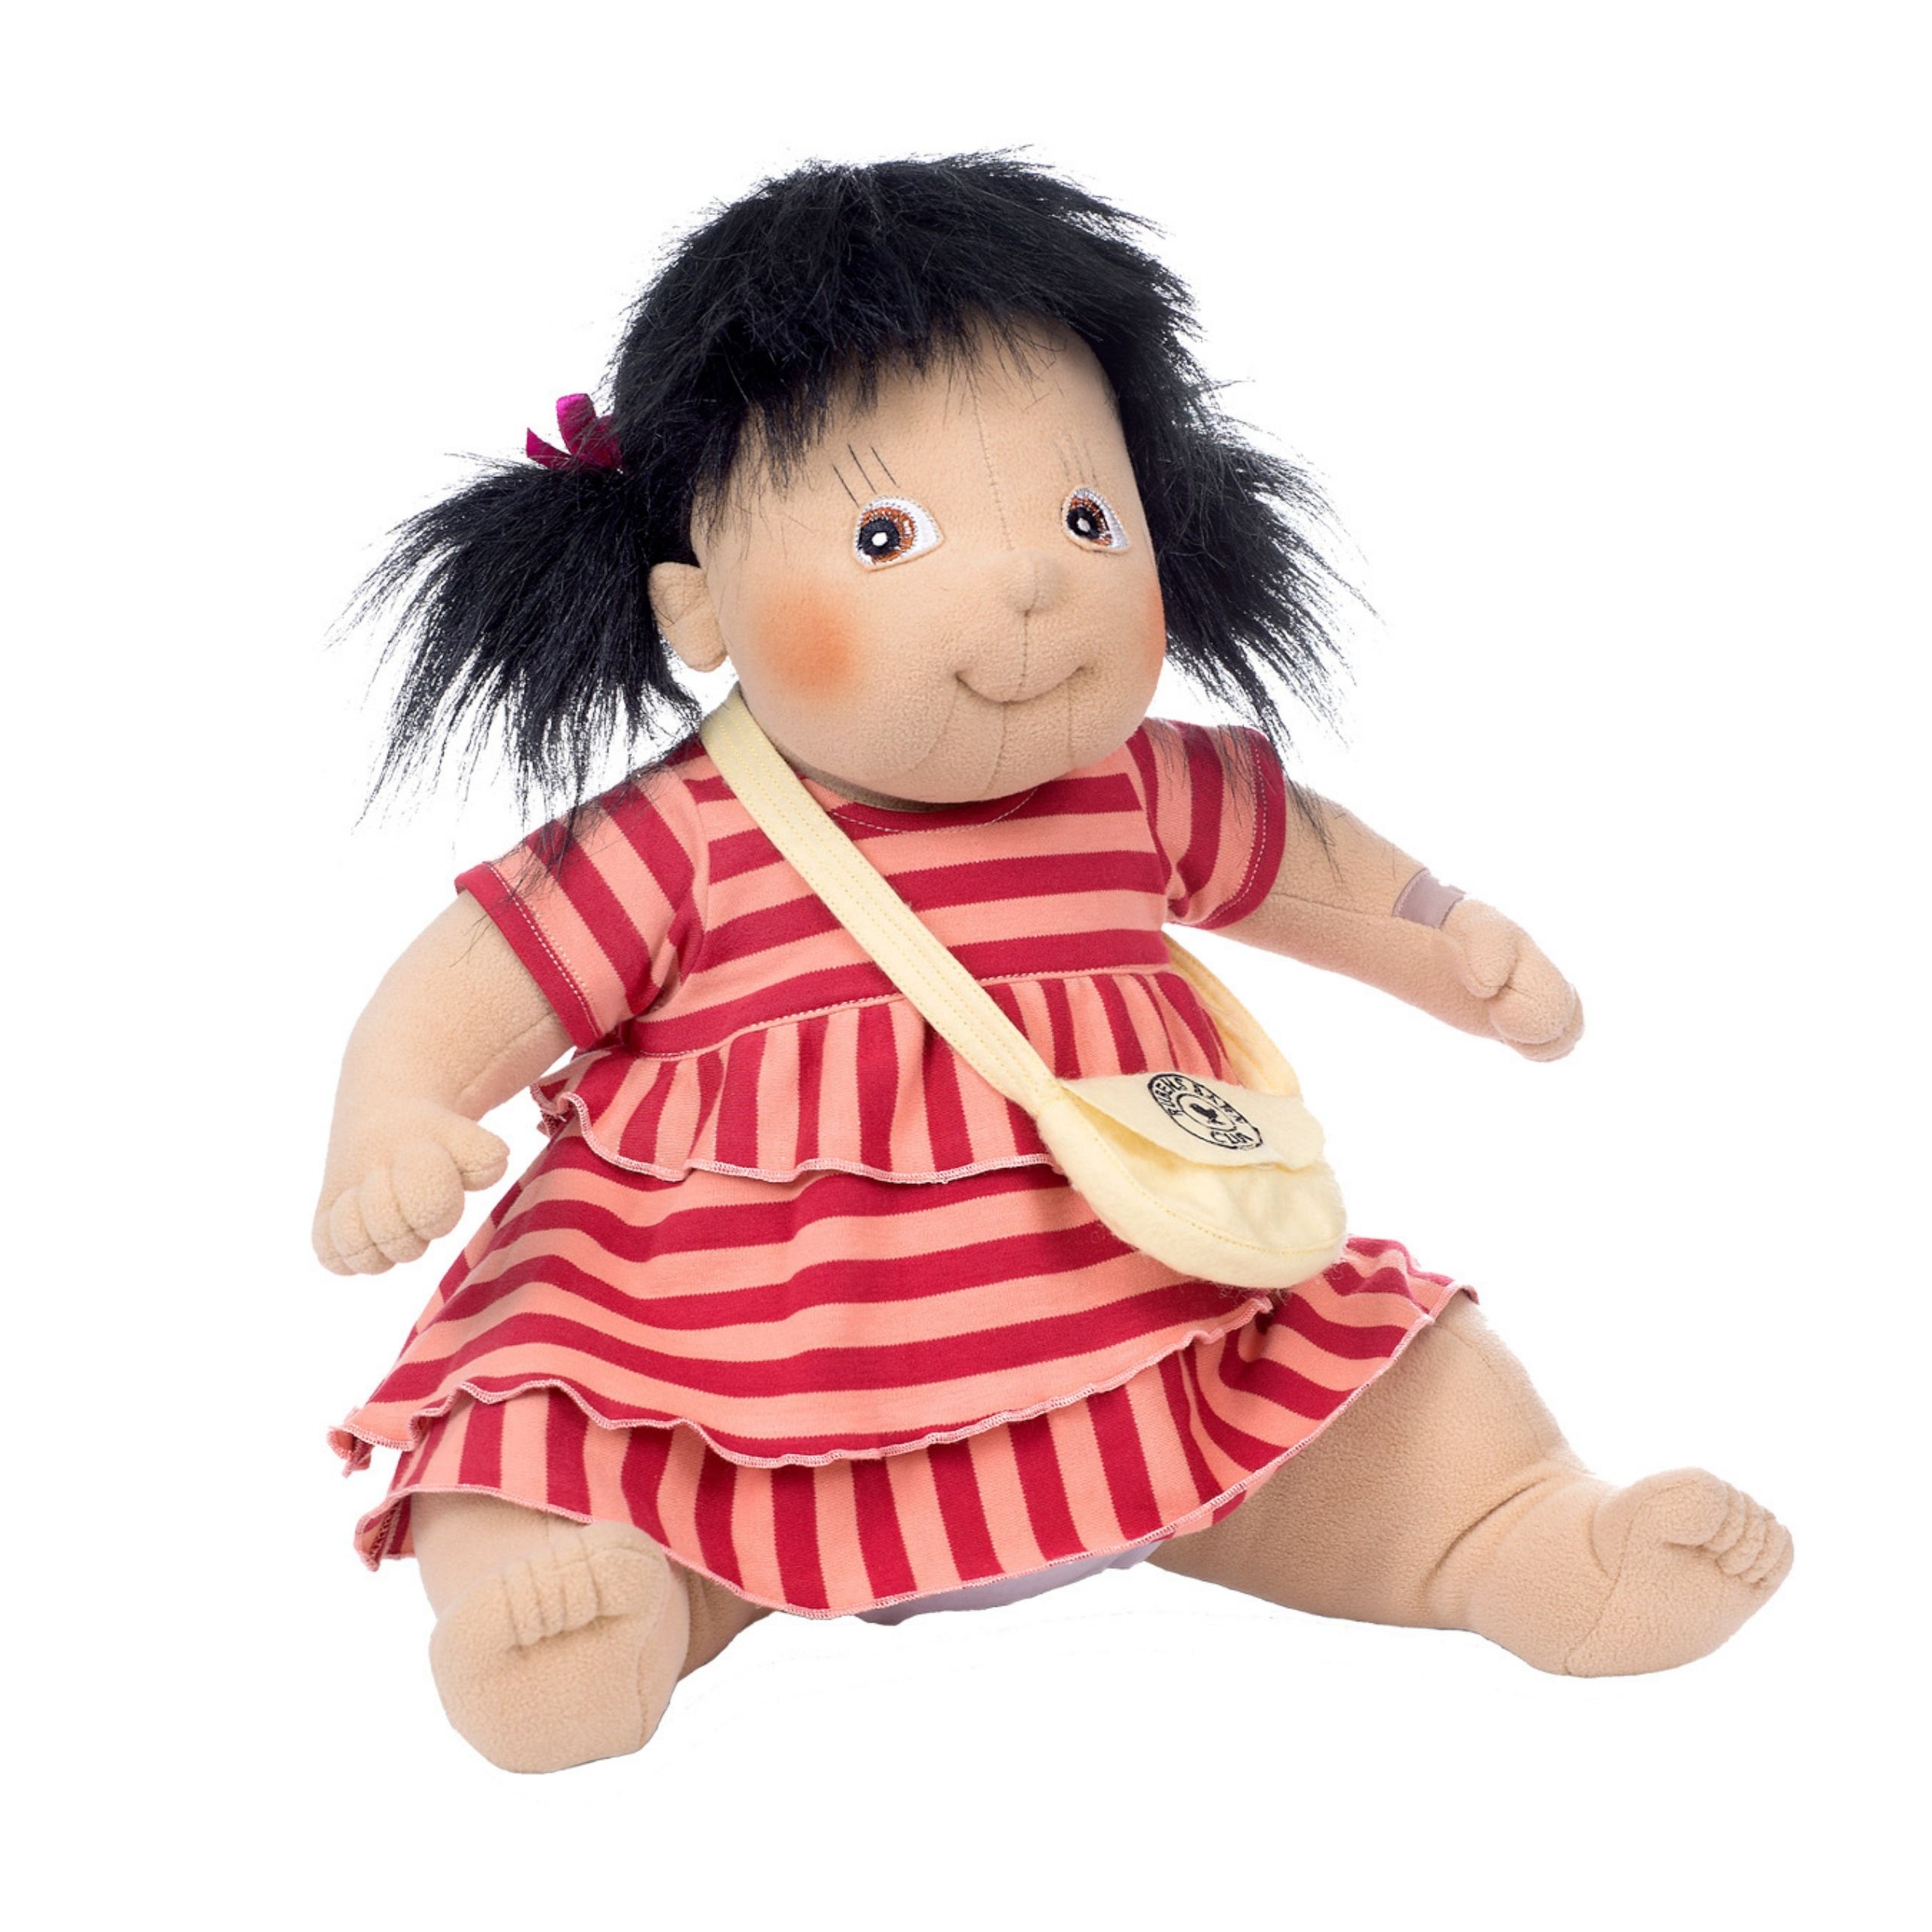 Puppen rubens barn weiche puppe maria original